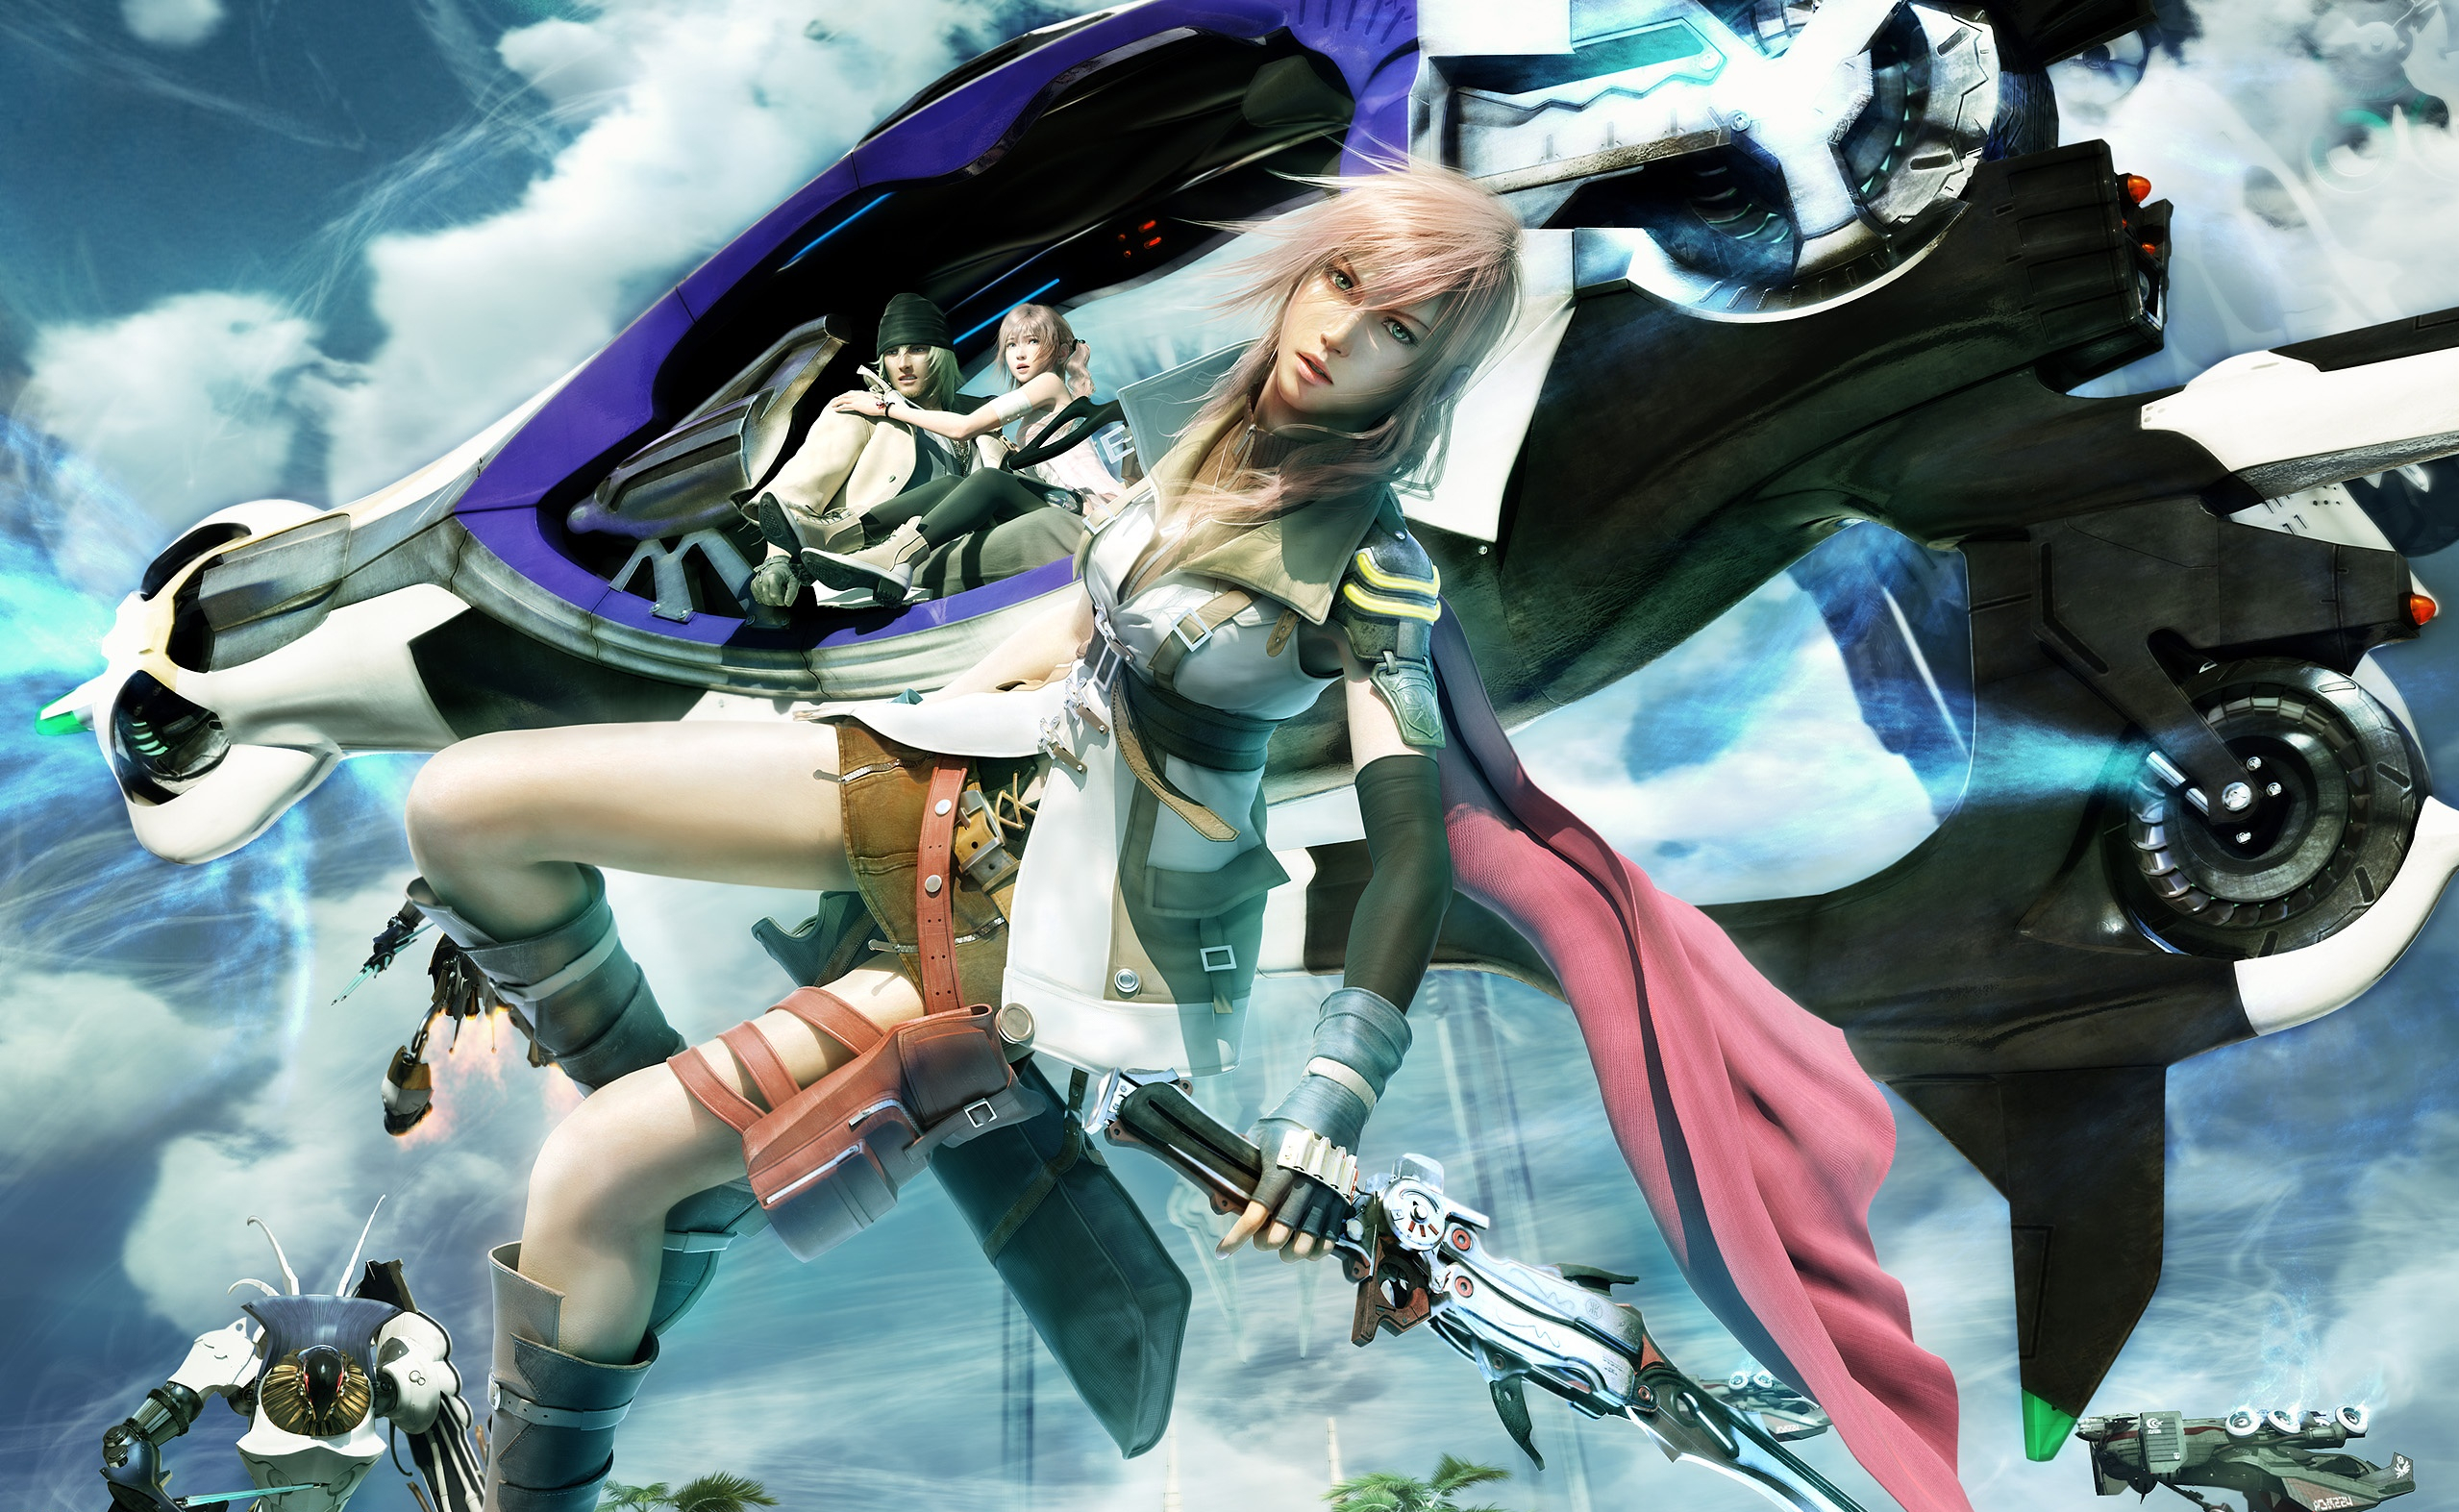 Final Fantasy XIII desktop wallpaper featuring Lightning, Snow Villiers, and Serah Farron.